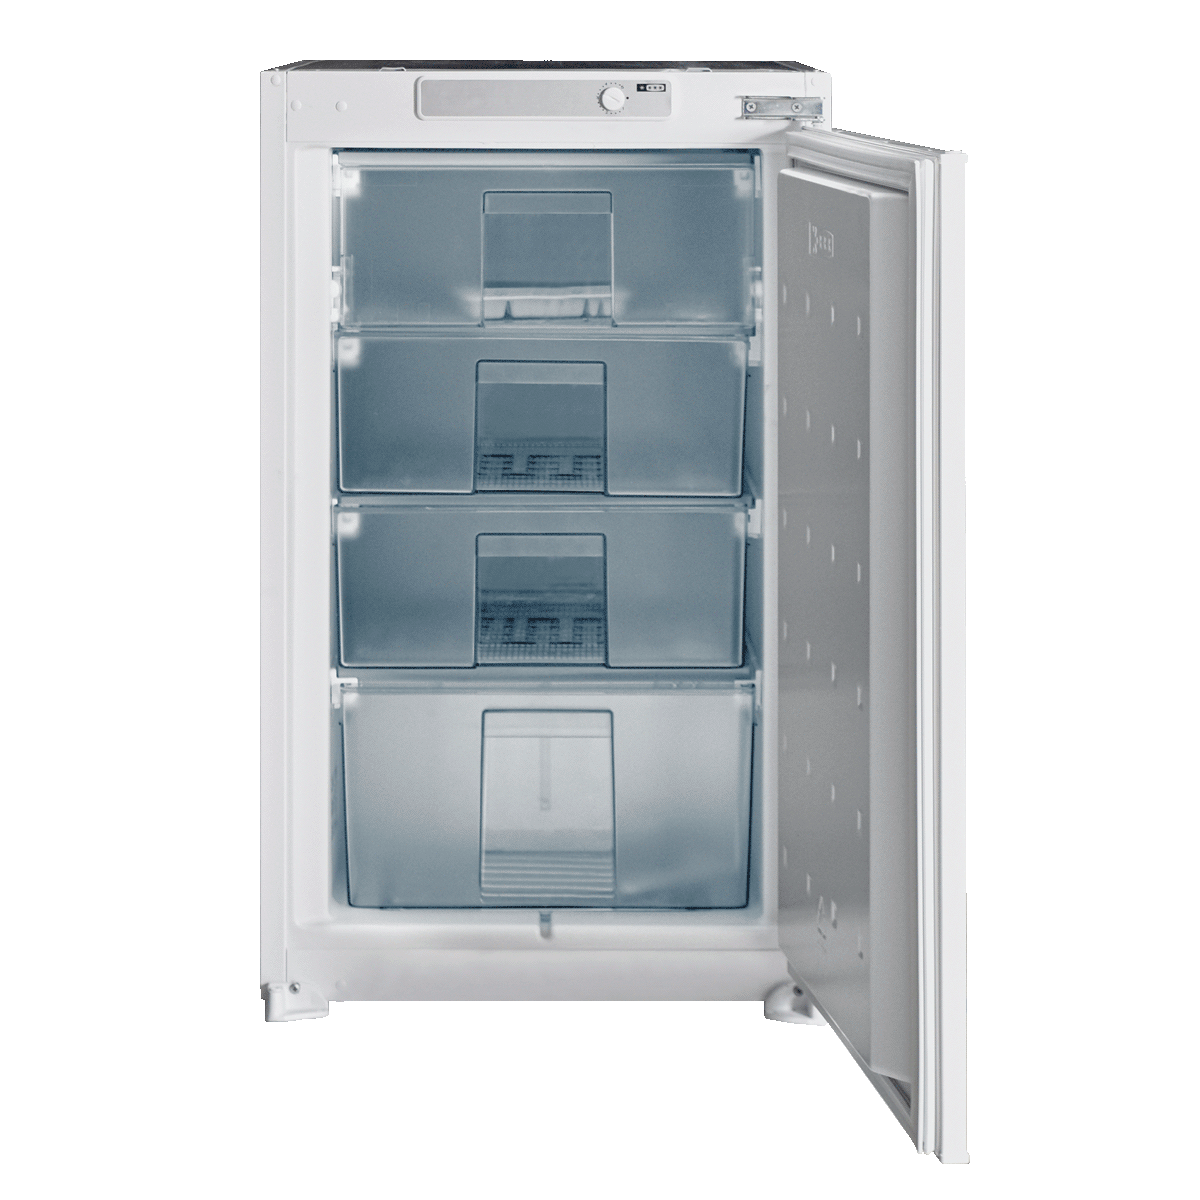 Built-in freezer IVF 1450 F 